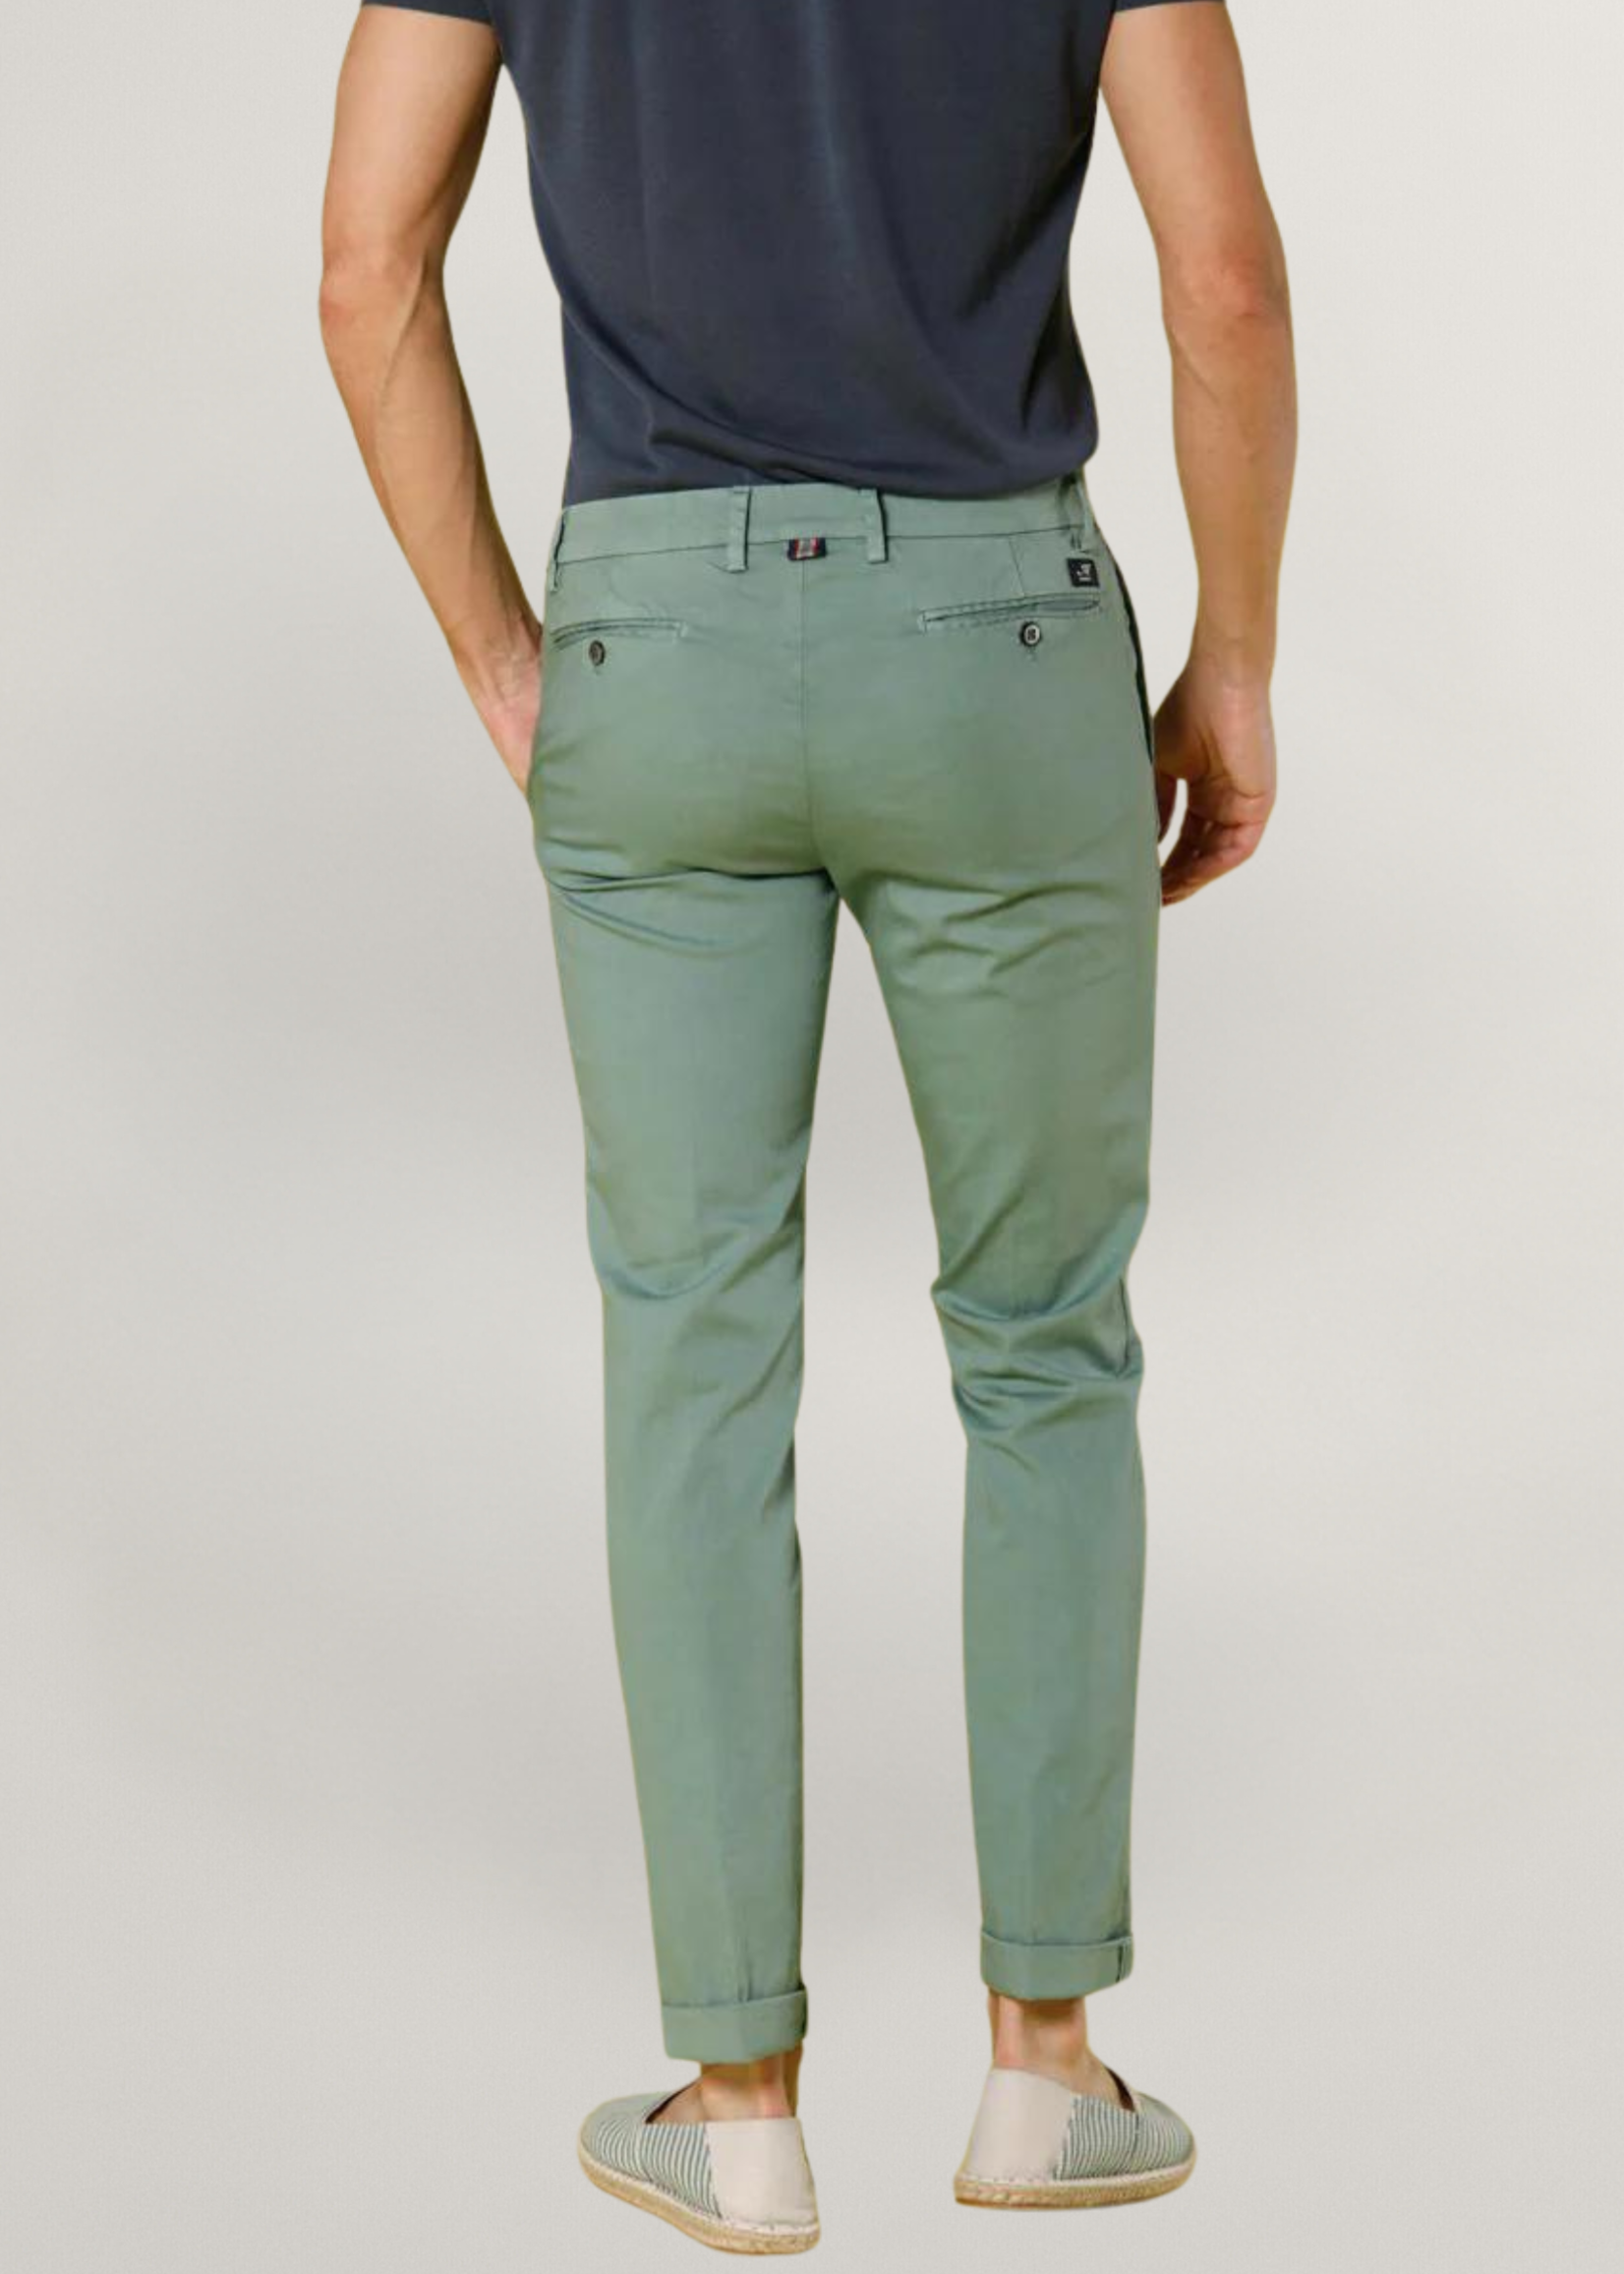 MASON'S Torino Style Pantalon chino homme en satin stretch Slim fit - Vert menthe